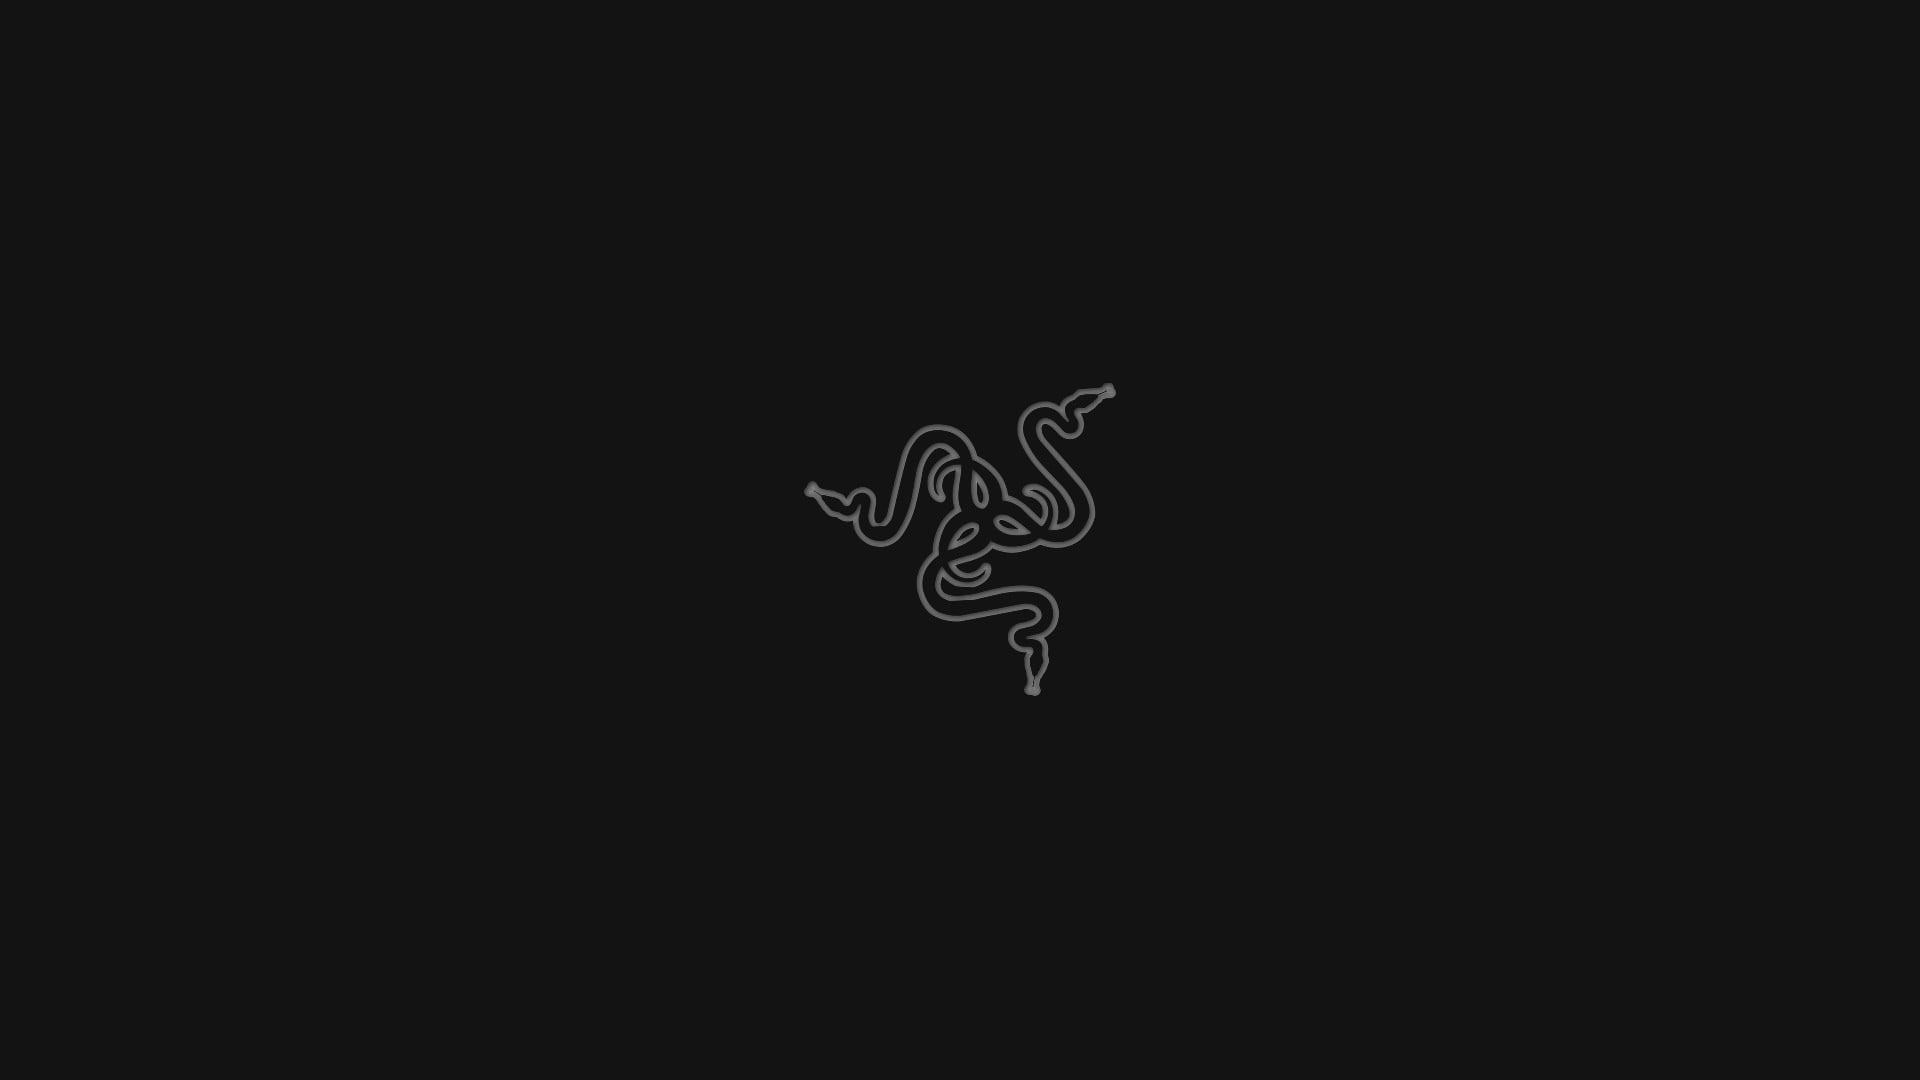 Black Razer logo wallpaper, dark, minimalism